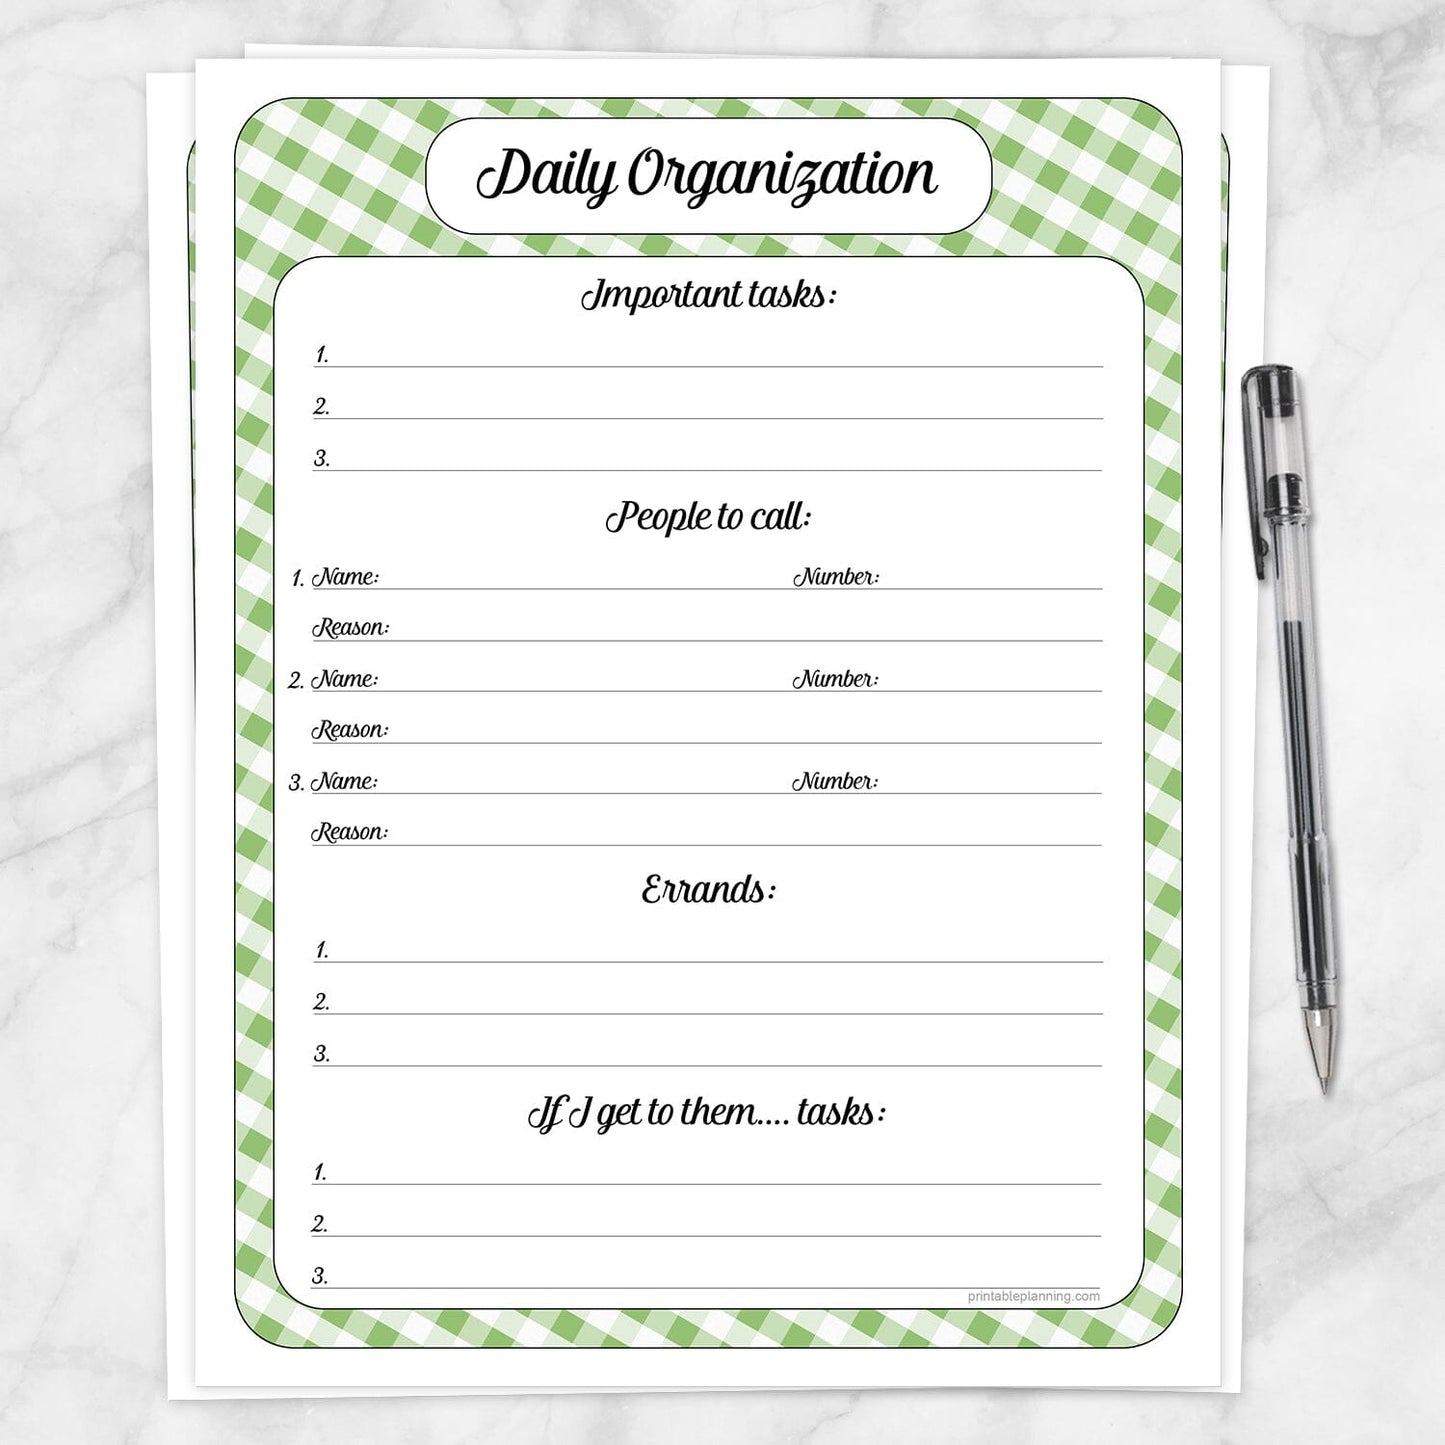 Printable Green Gingham Daily Organization Category Task Sheet at Printable Planning.